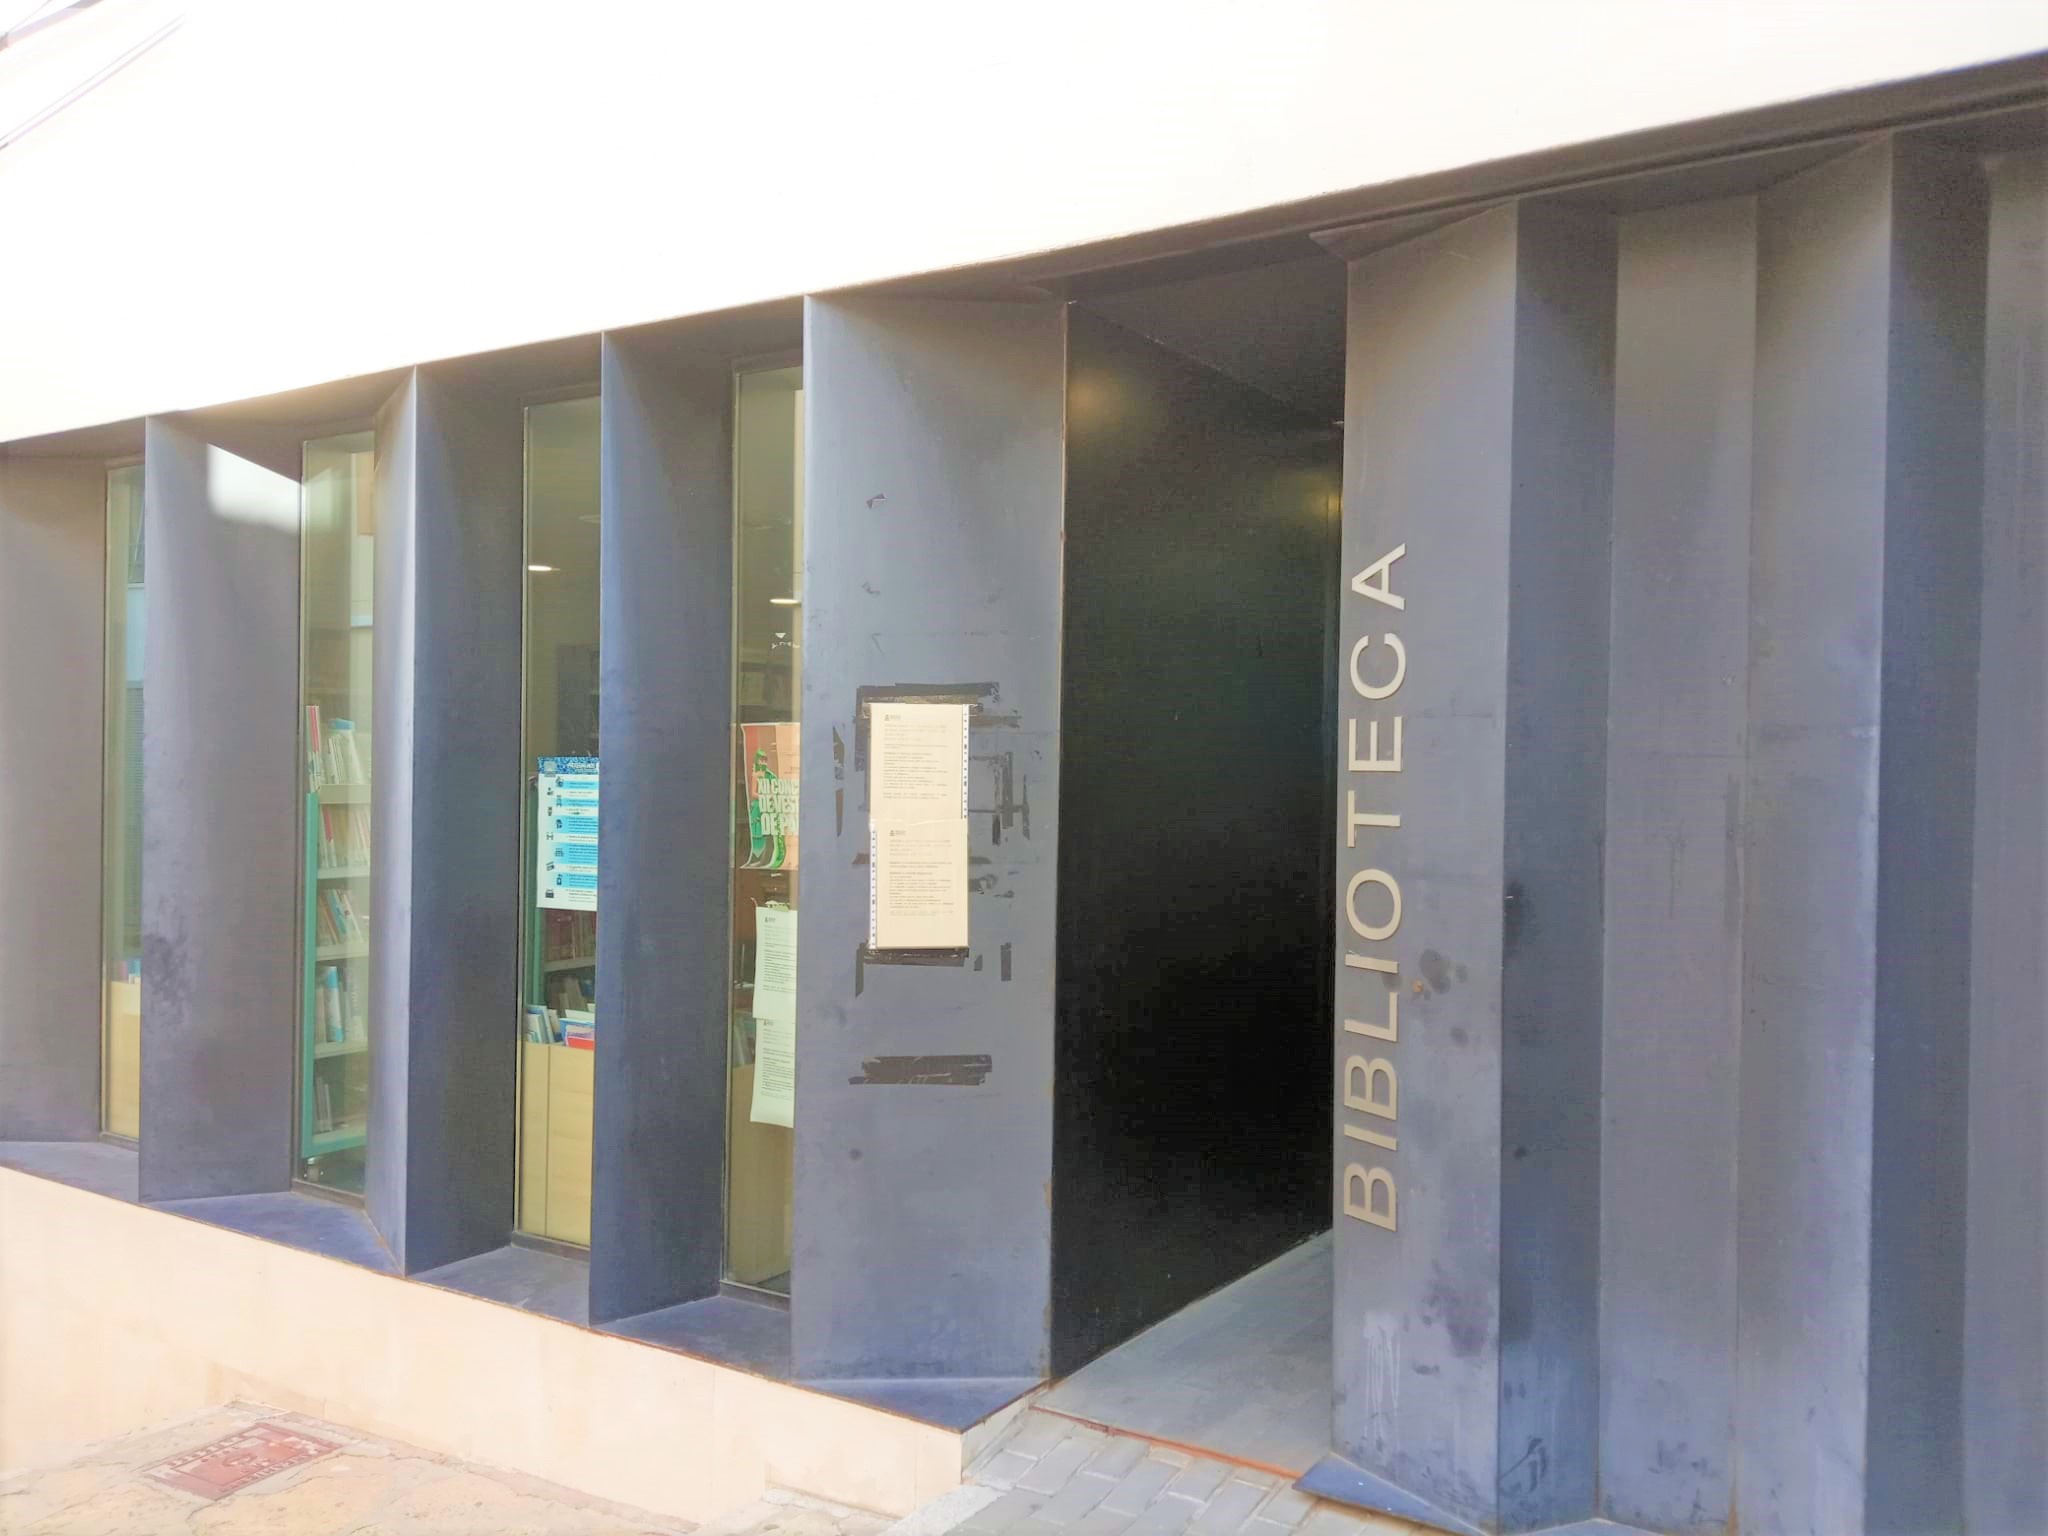 Biblioteca Municipal de Banyeres de Mariola